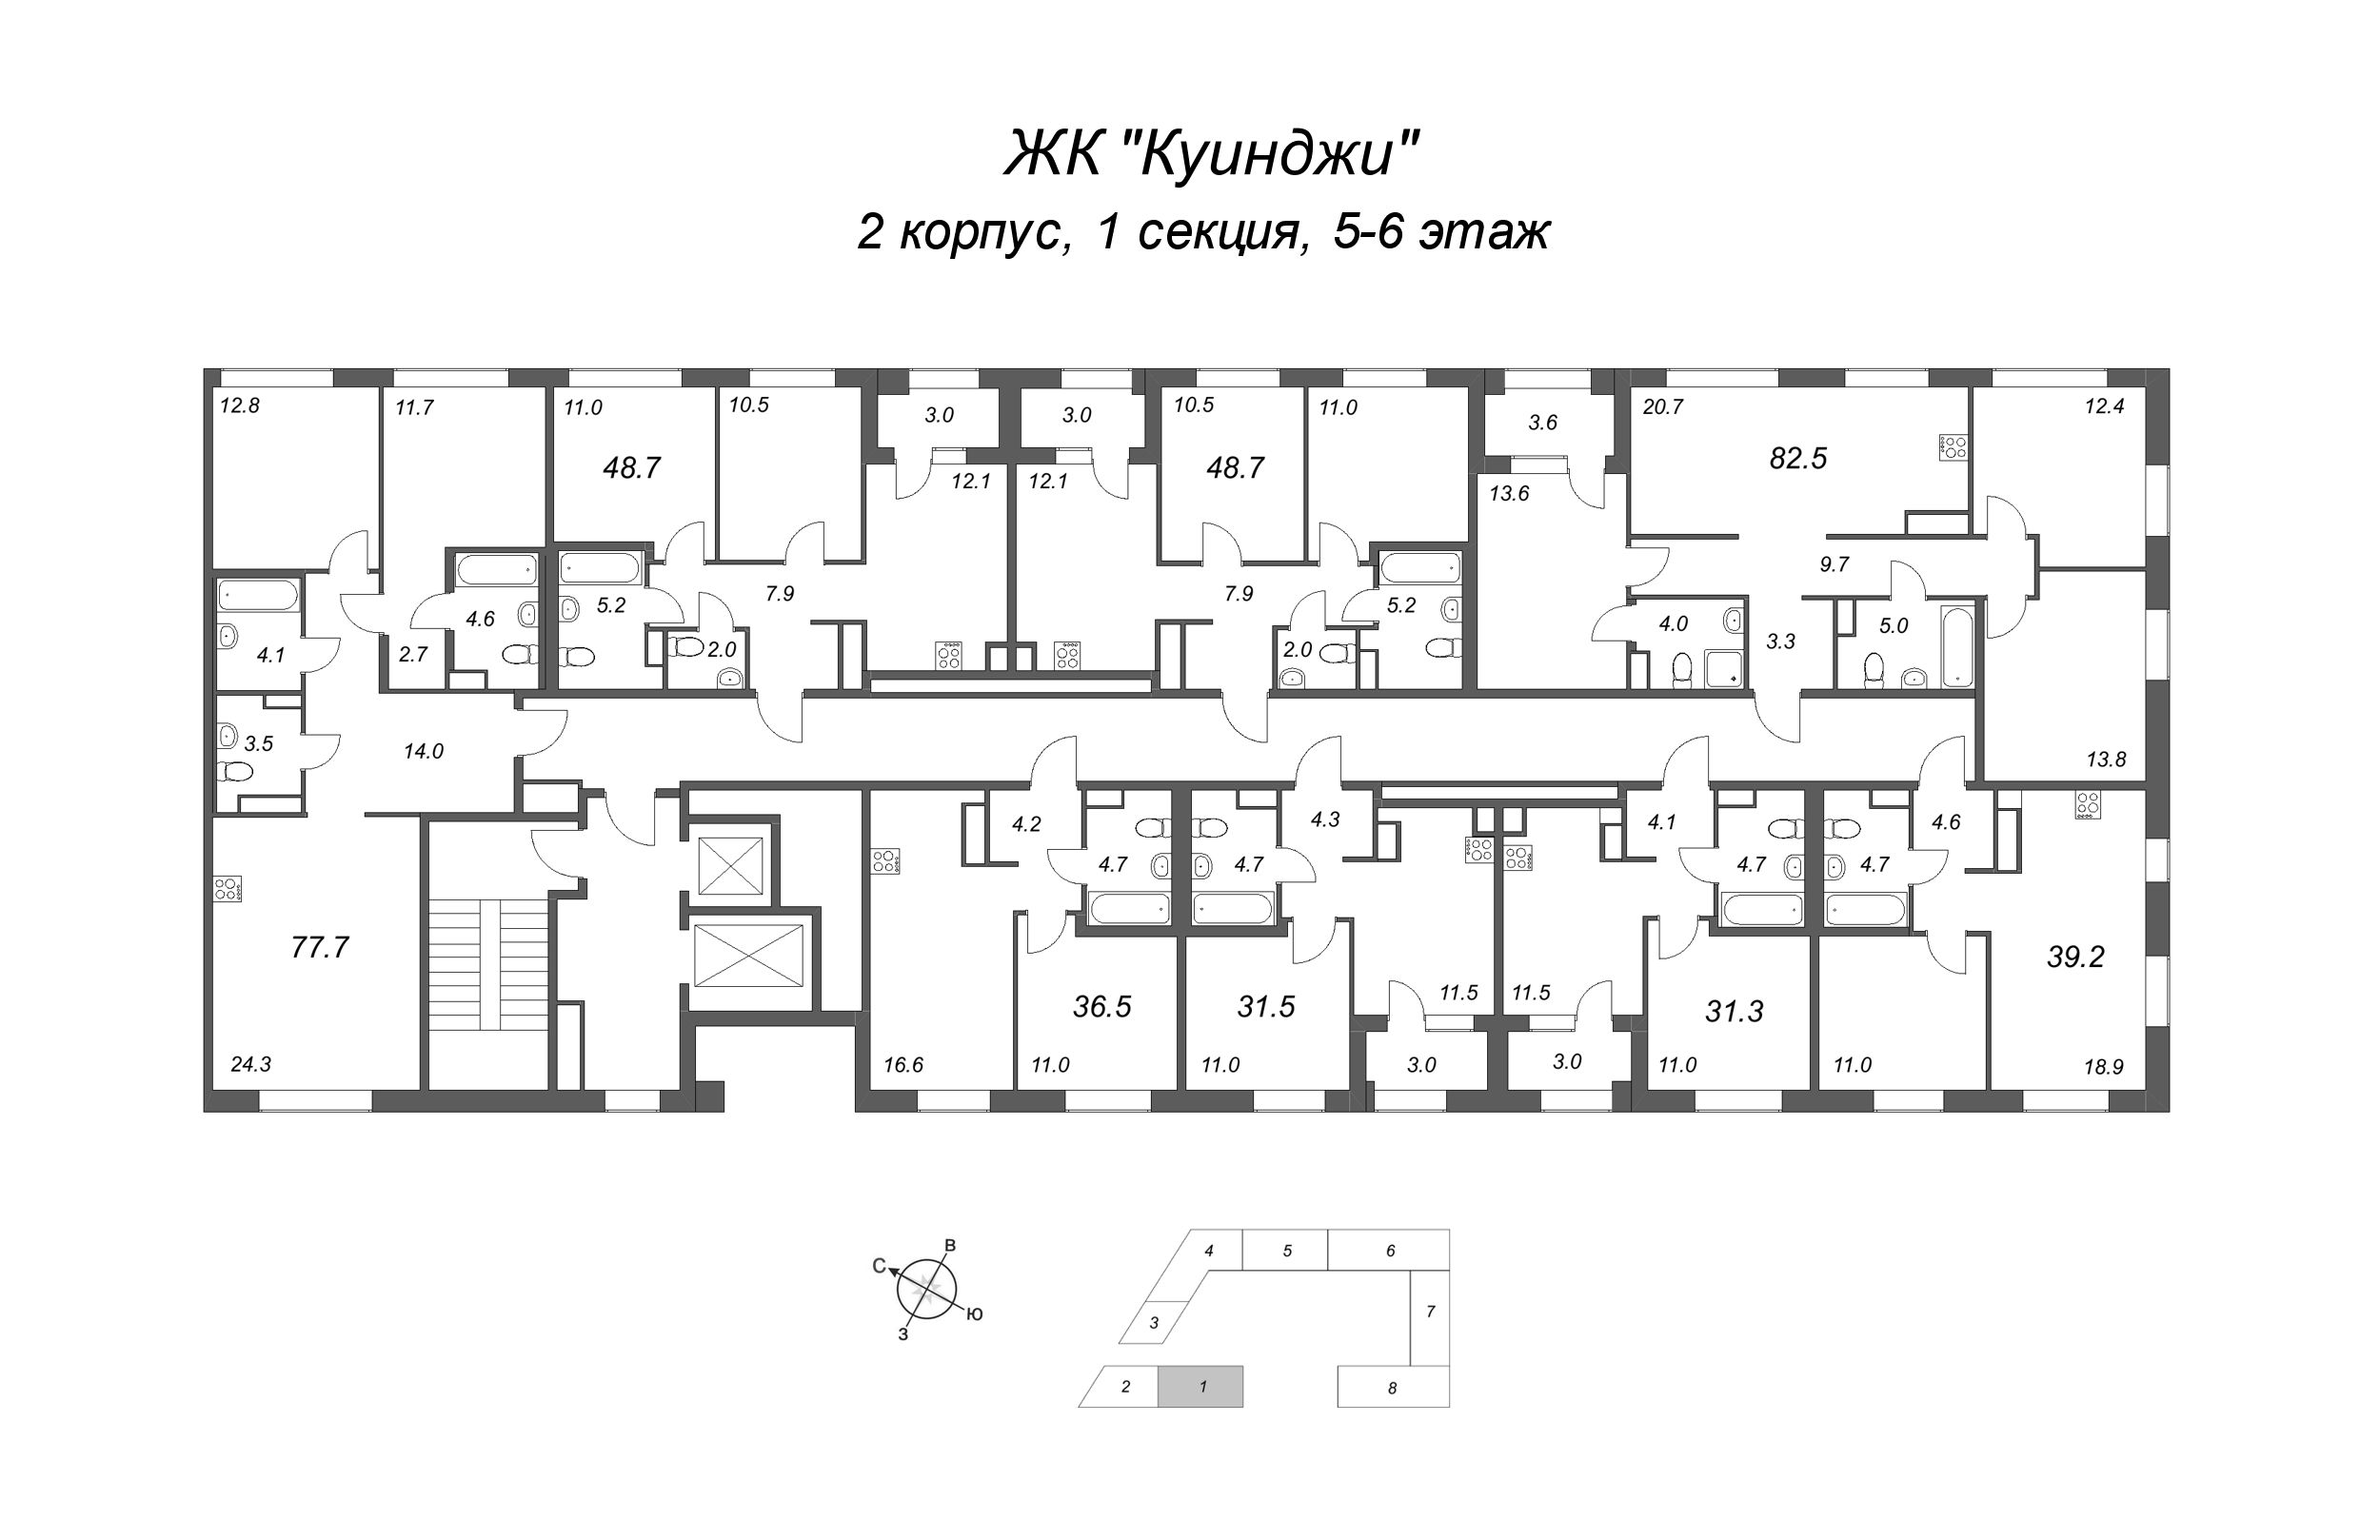 4-комнатная (Евро) квартира, 82.5 м² - планировка этажа